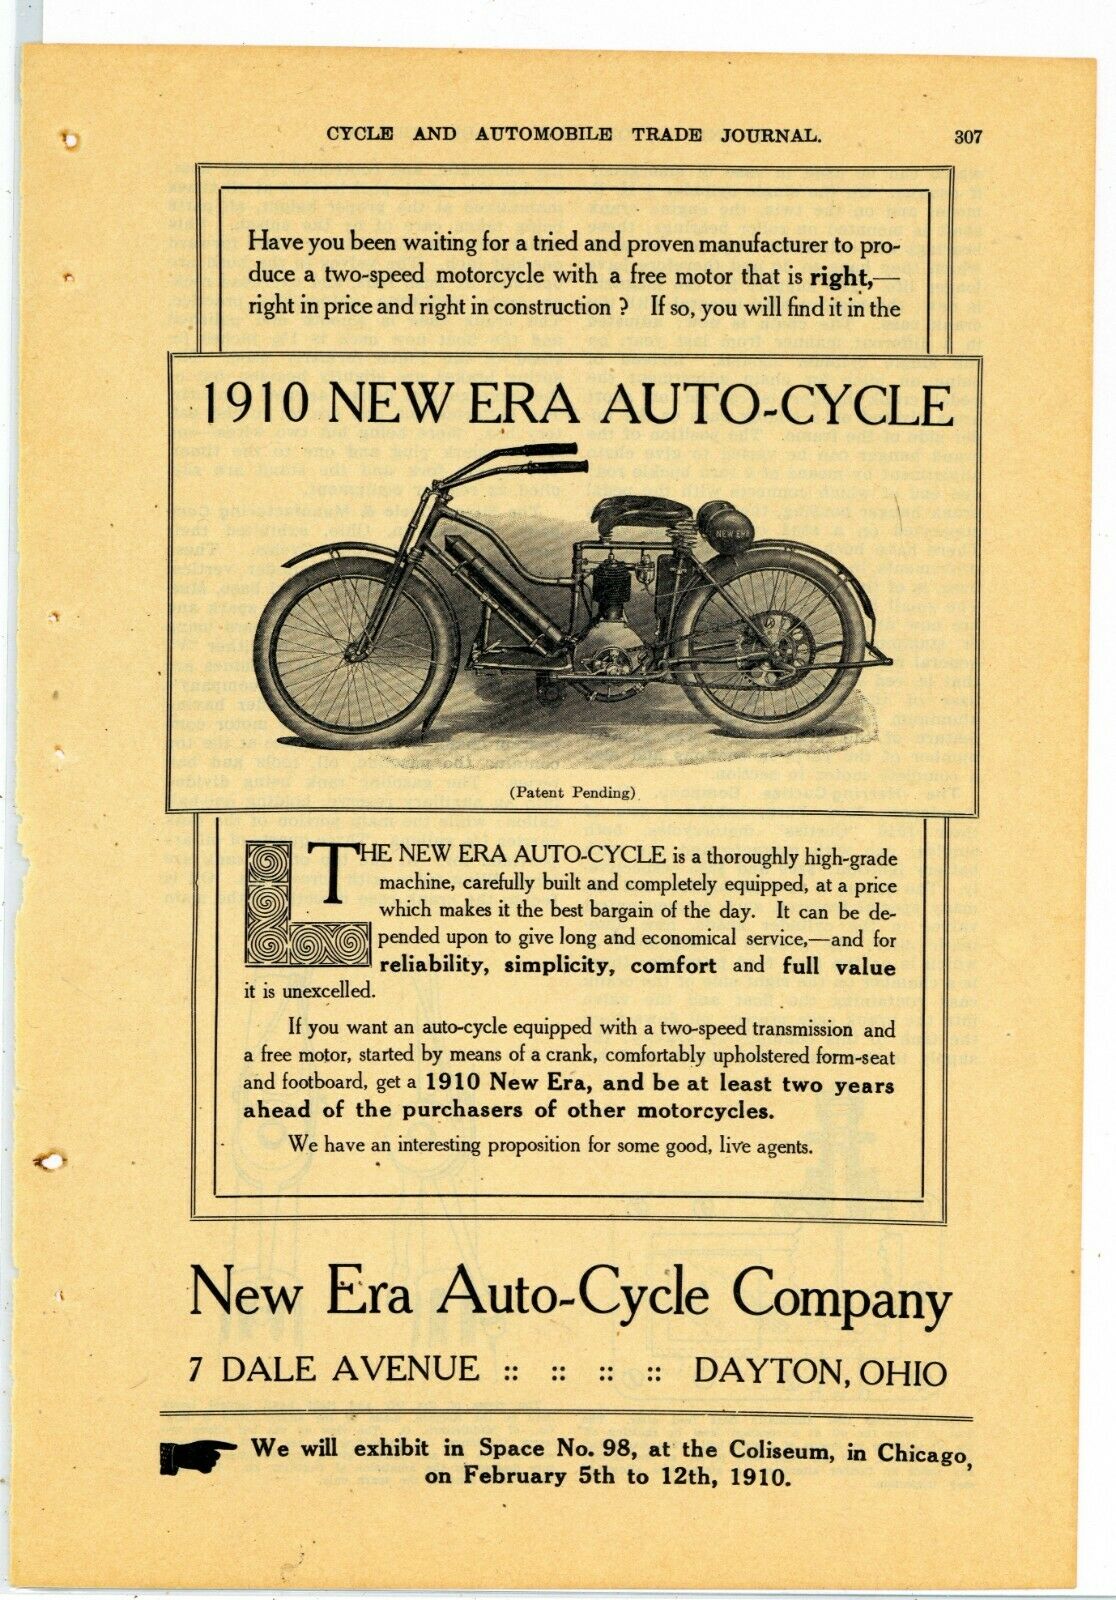 New Era Auto-Cycle